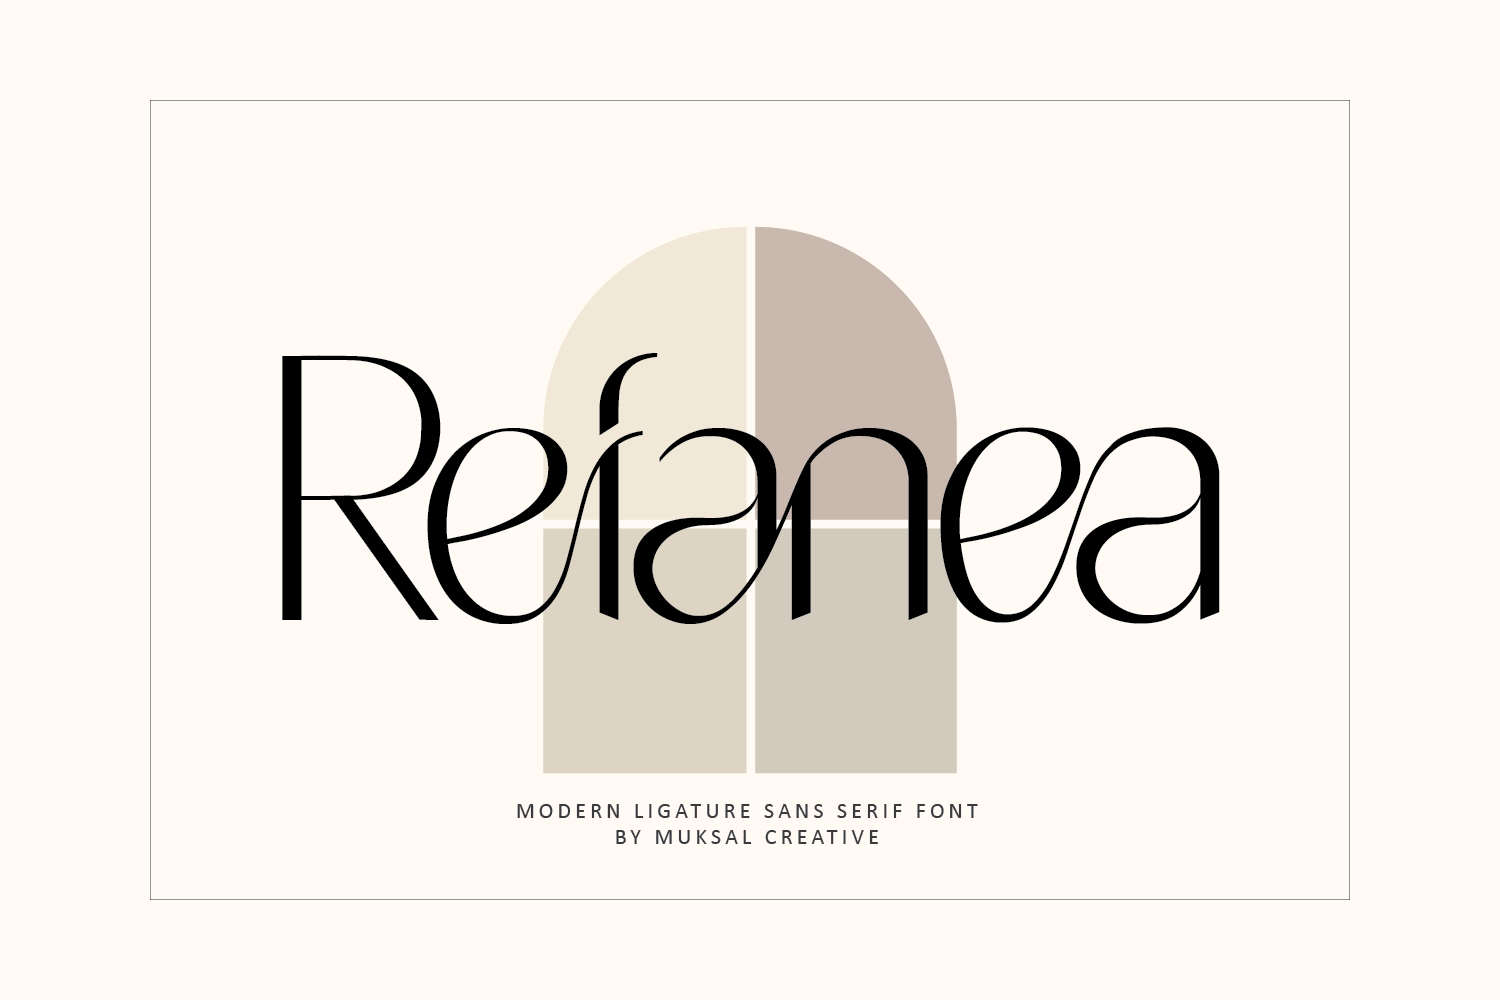 Refanea Free Font